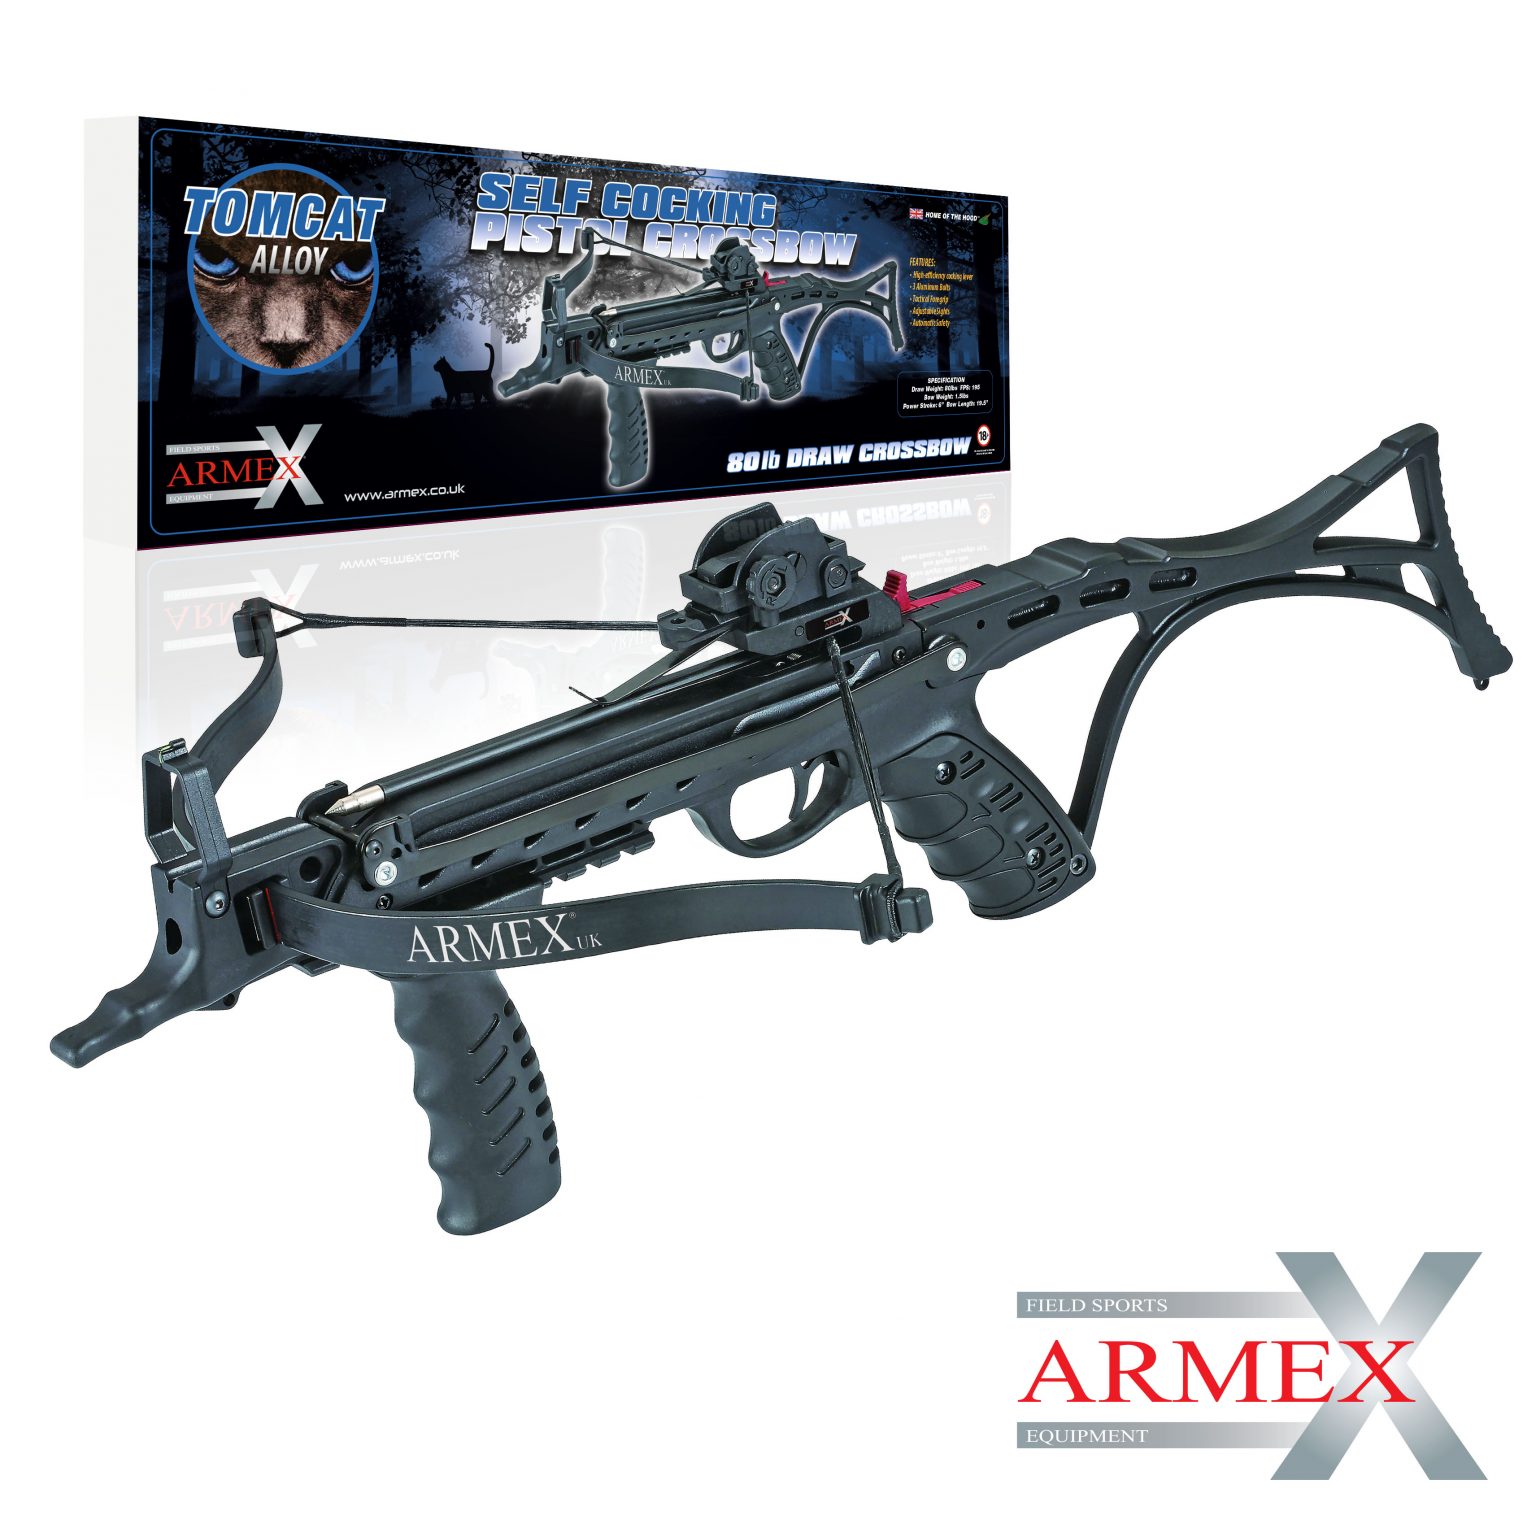 Armex Crossbows Pistol Crossbow Tomcat Enfield Sports Jaguar 175lb Crossbow 7234